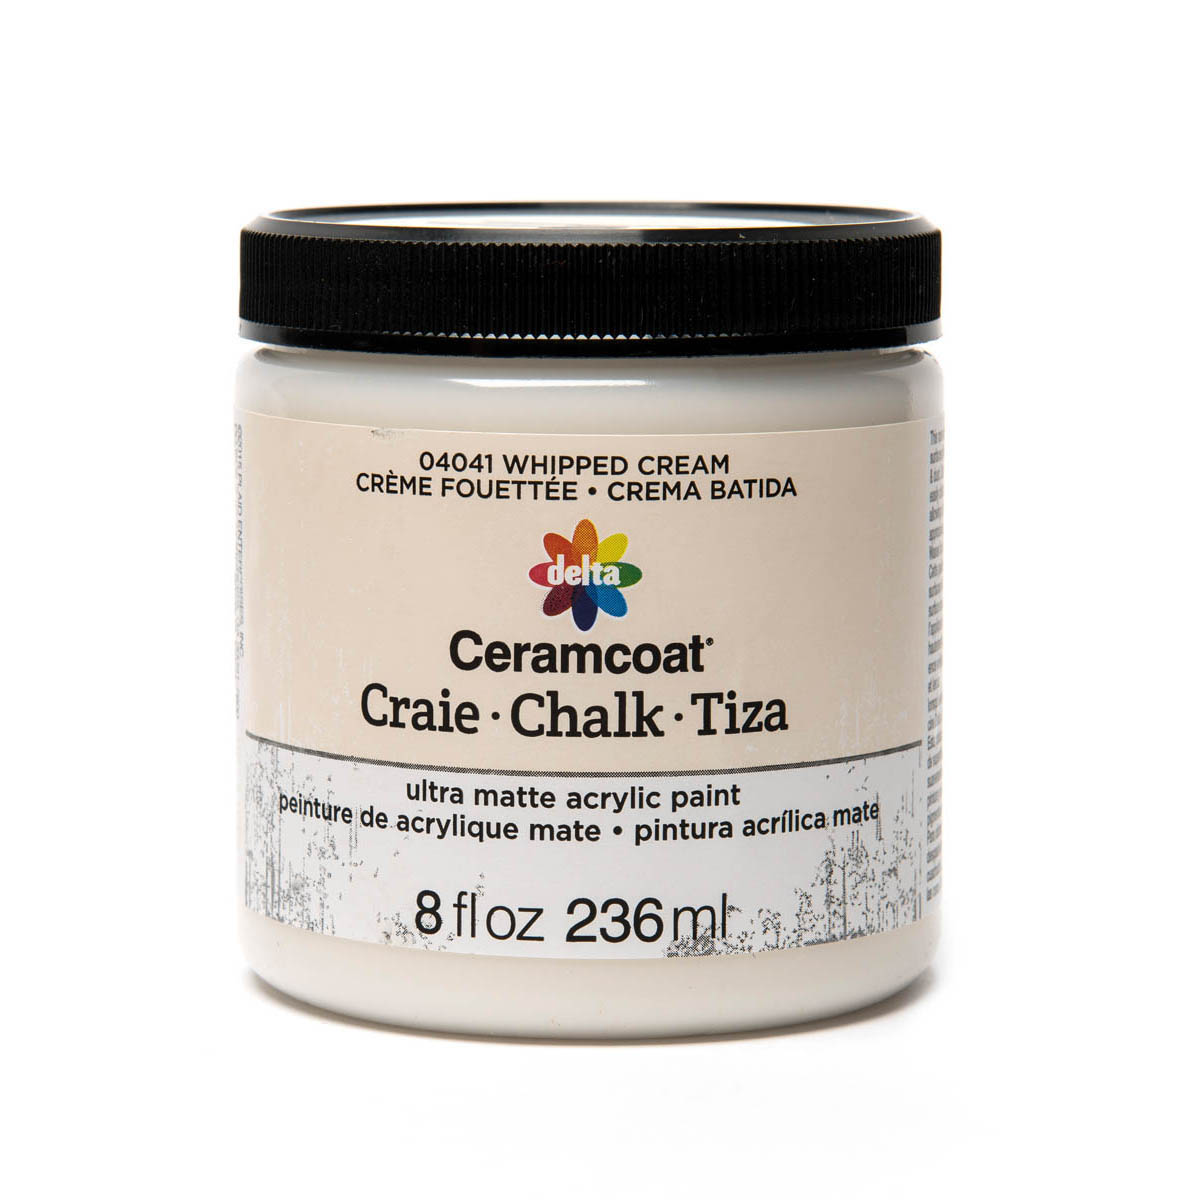 Delta Ceramcoat ® Chalk - Whipped Cream, 8 oz. - 04041